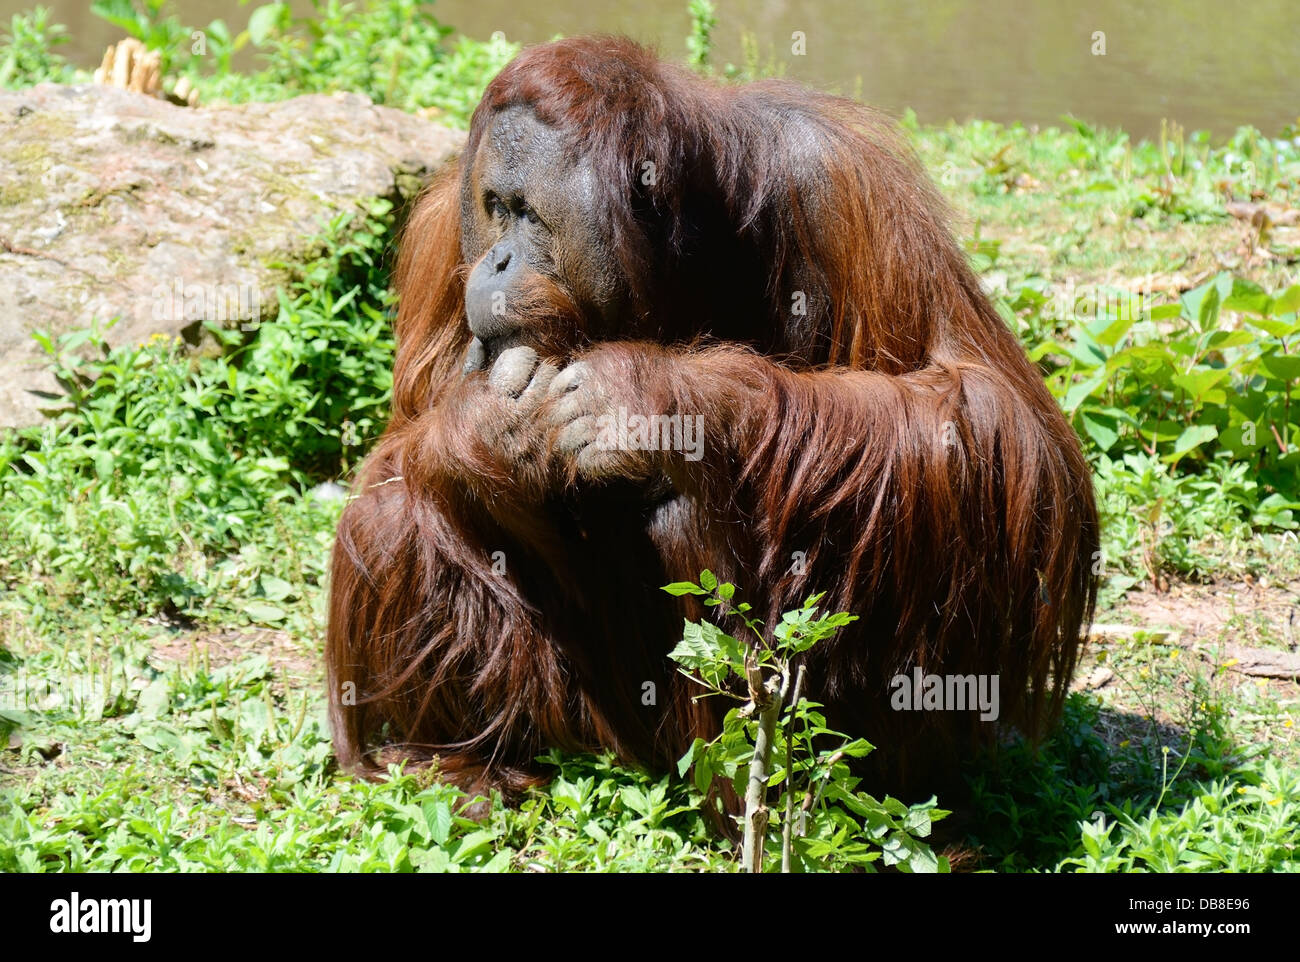 A lone male orangutan sitting in the sunshine with long orange hair Stock Photo